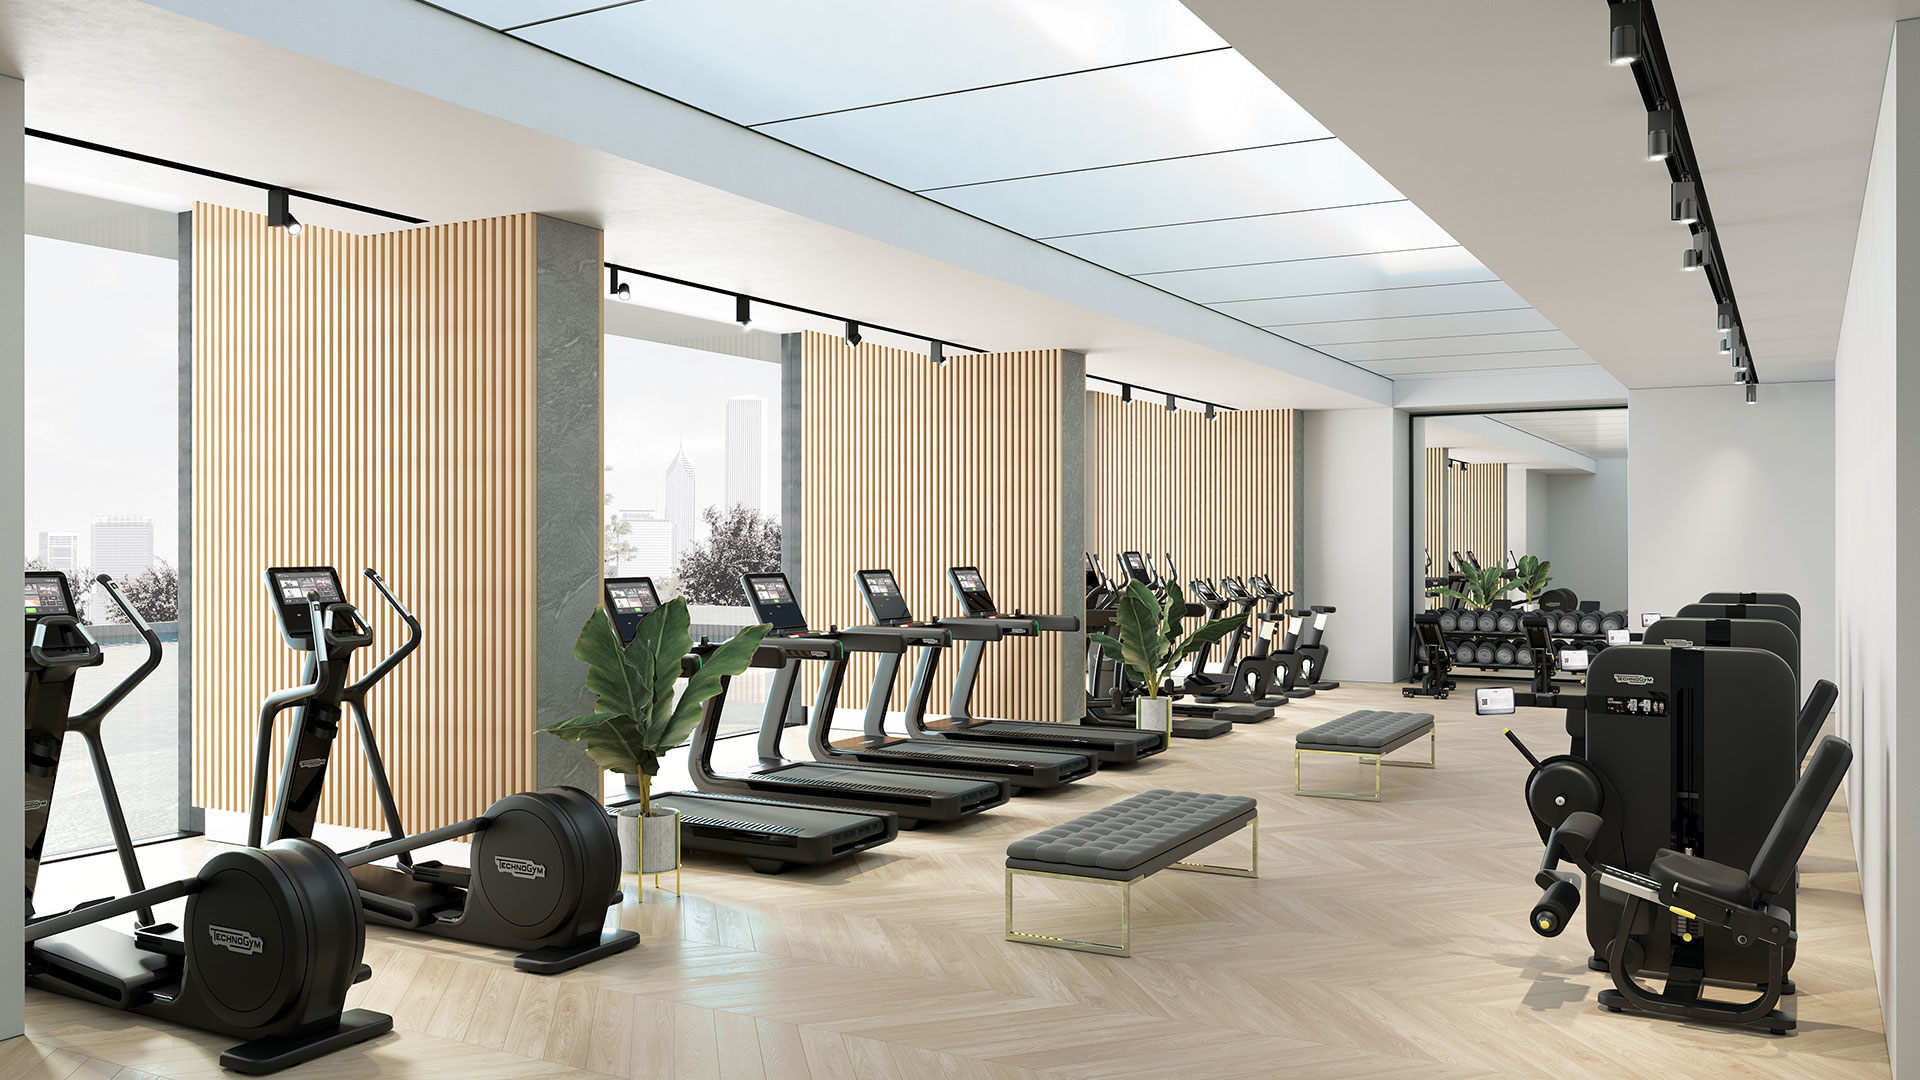 Technogym Interior Design helps you design your own gym at home